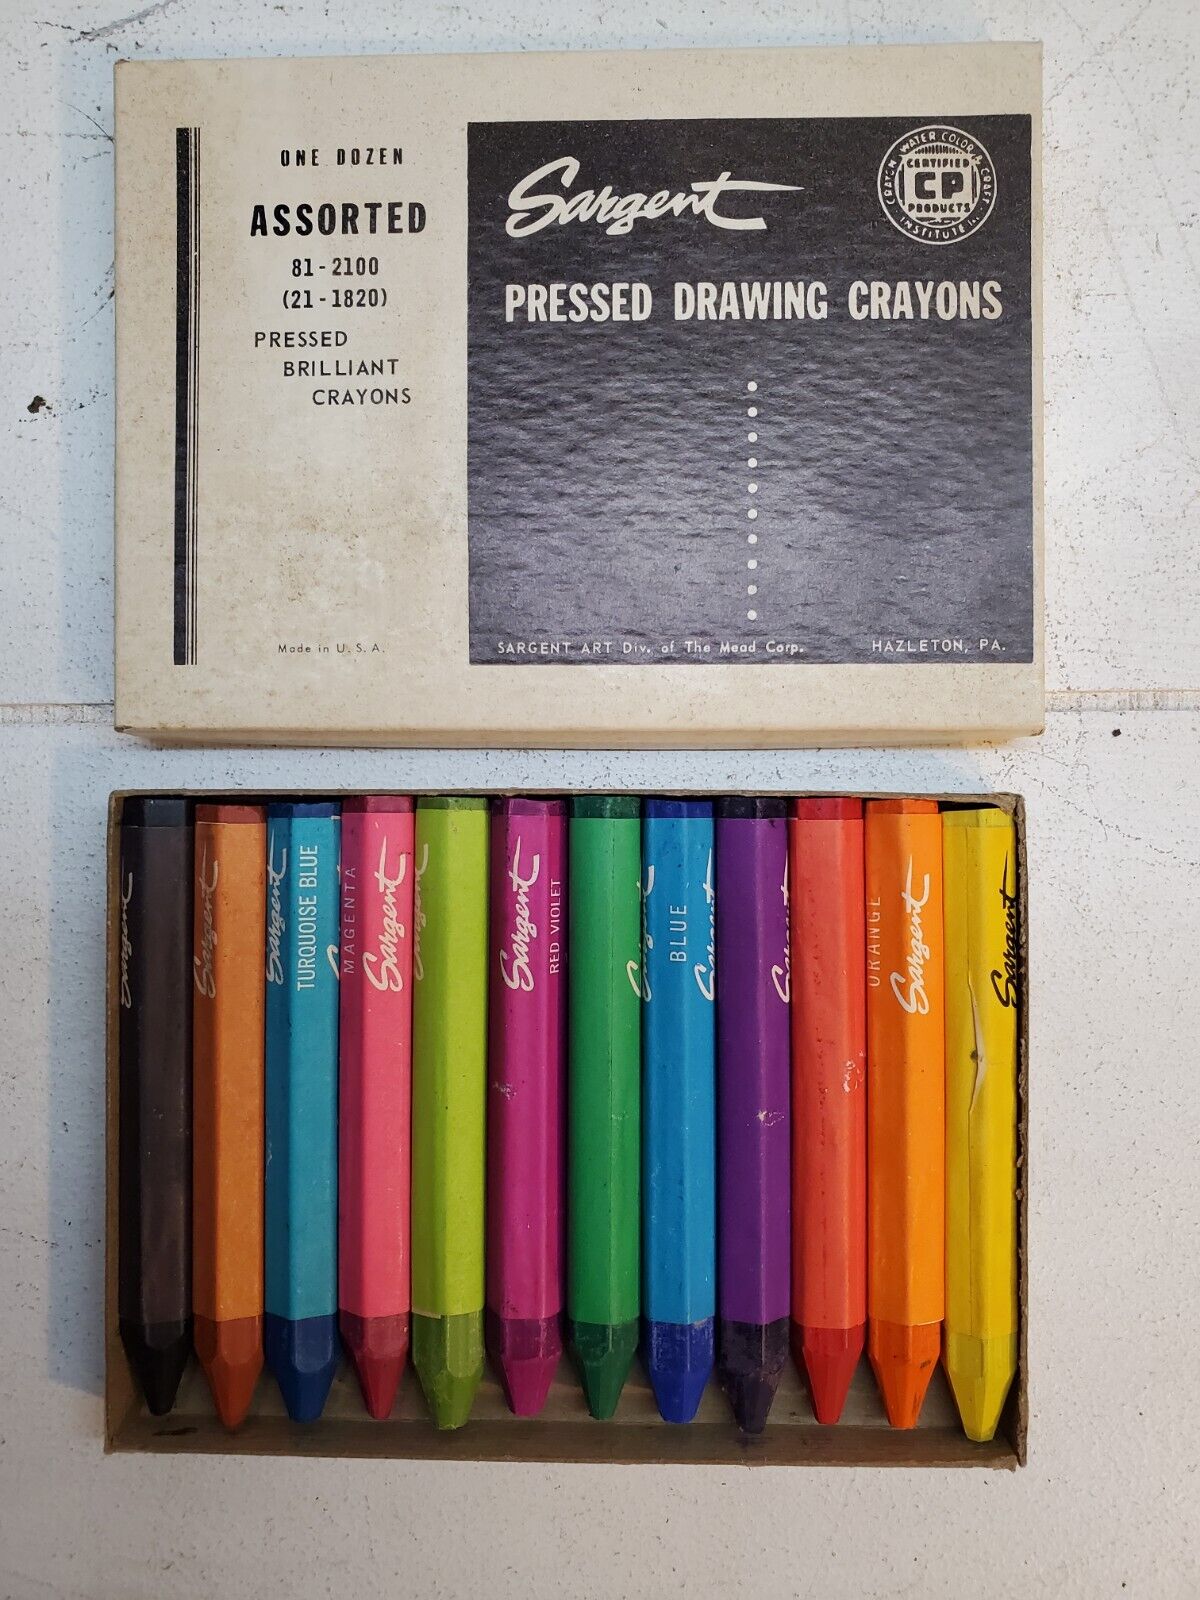 Vintage SARGENT Pressed Drawing Crayons  # 81-2100 (21-1820)  one dozen